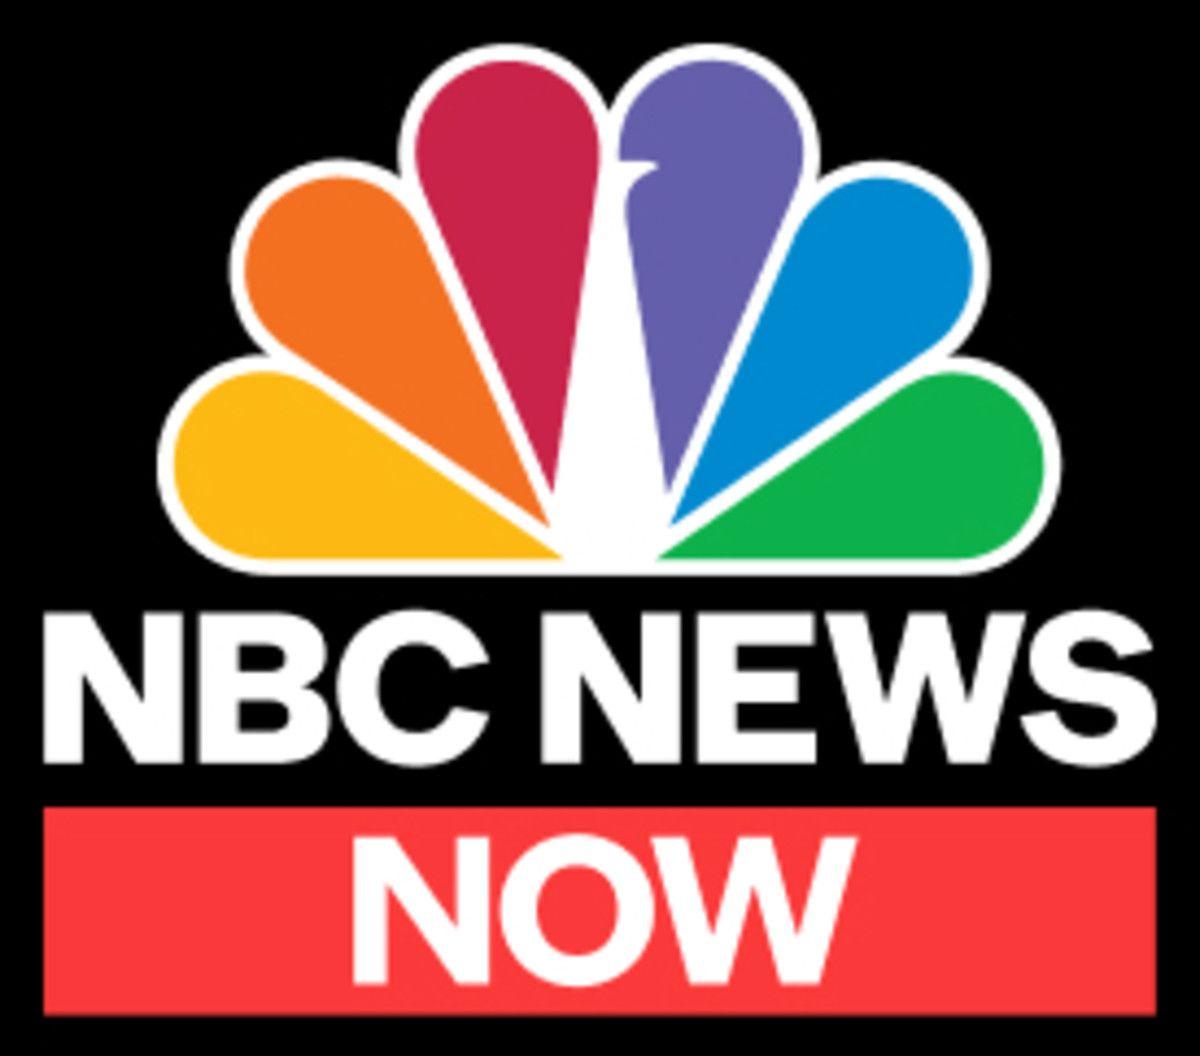 Ott Logo - NBC News Now Expands Live OTT Programming - Broadcasting & Cable